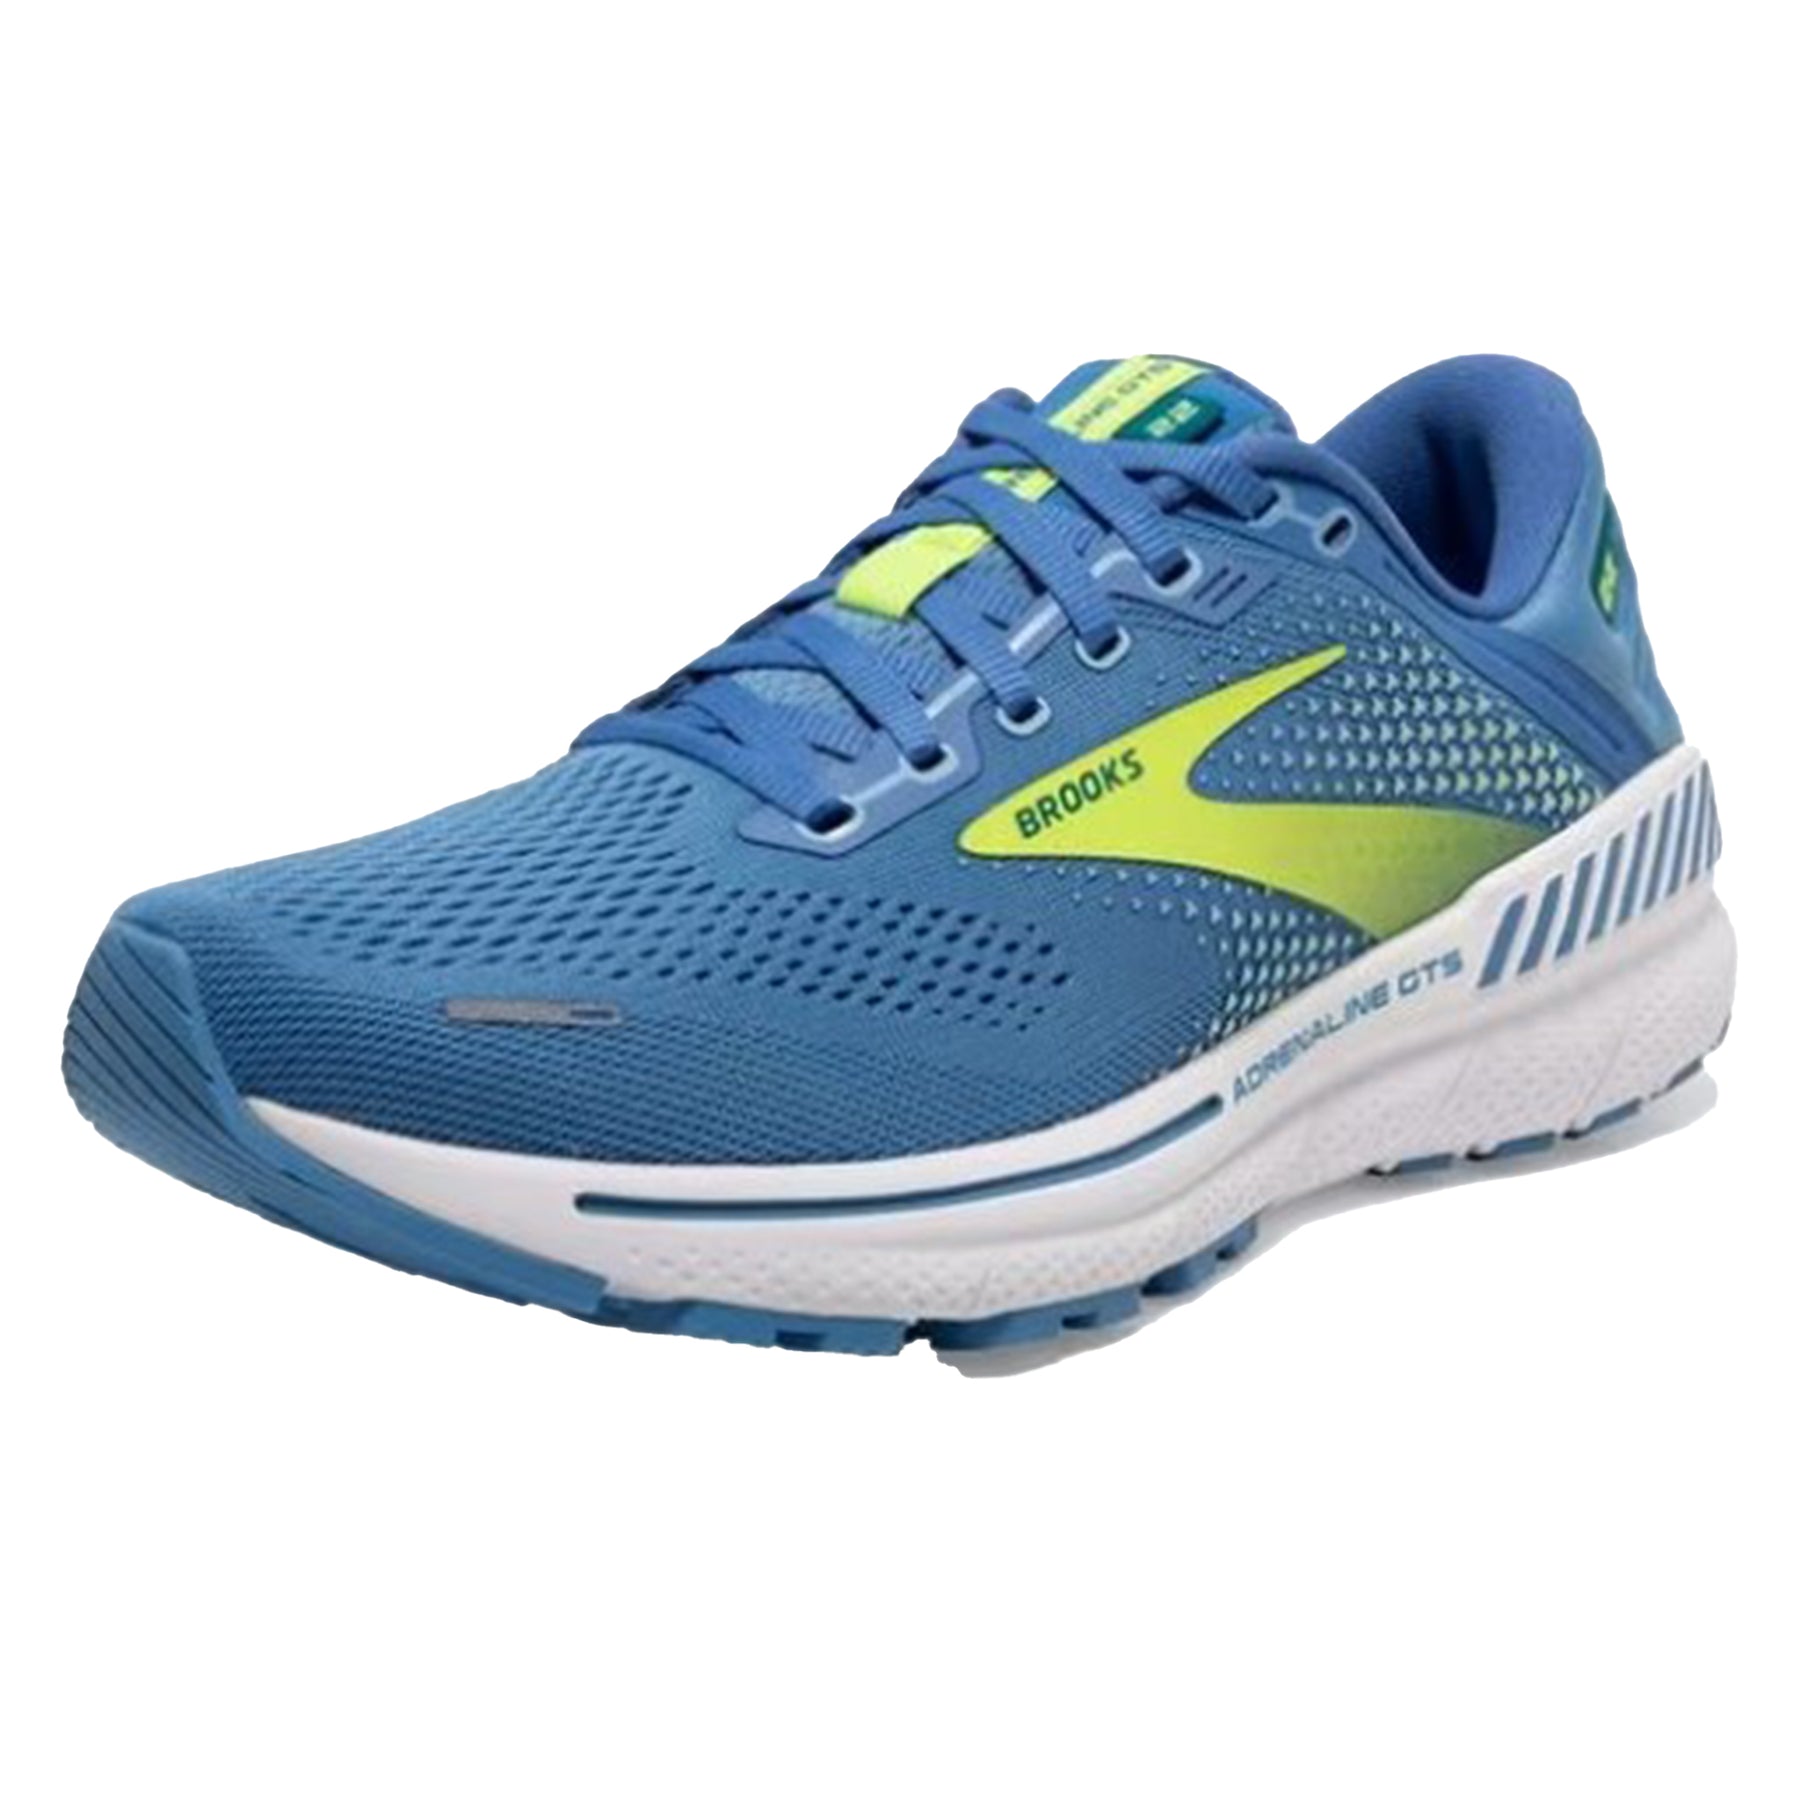 Brooks Adrenaline GTS 22 Womens Running Shoes: Silver Lake Blue/Green/White